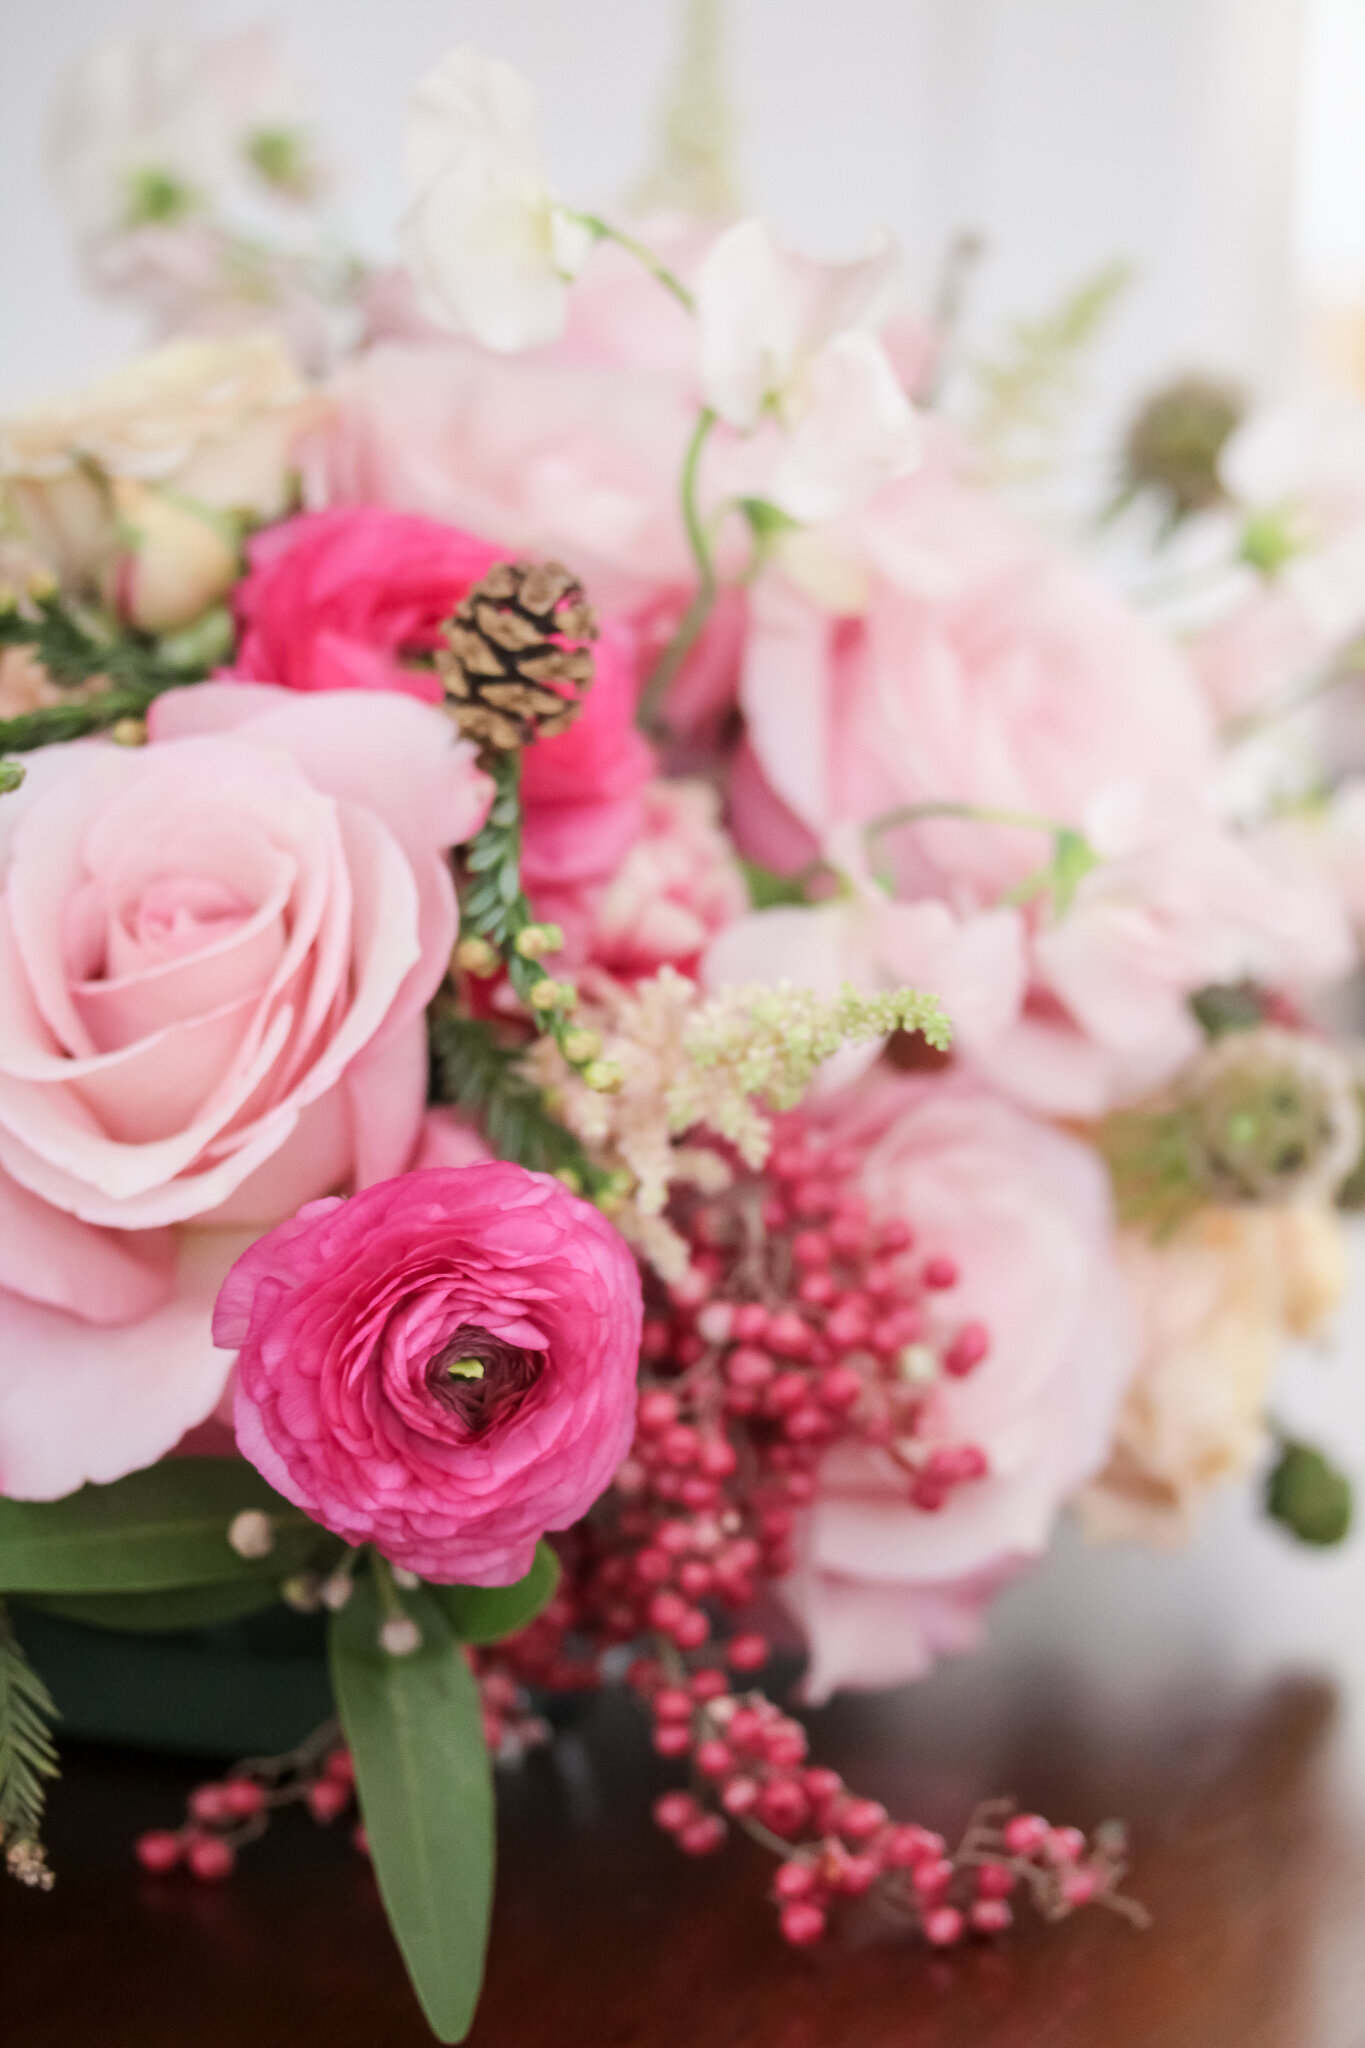 Image by Sarah's Floral Design 